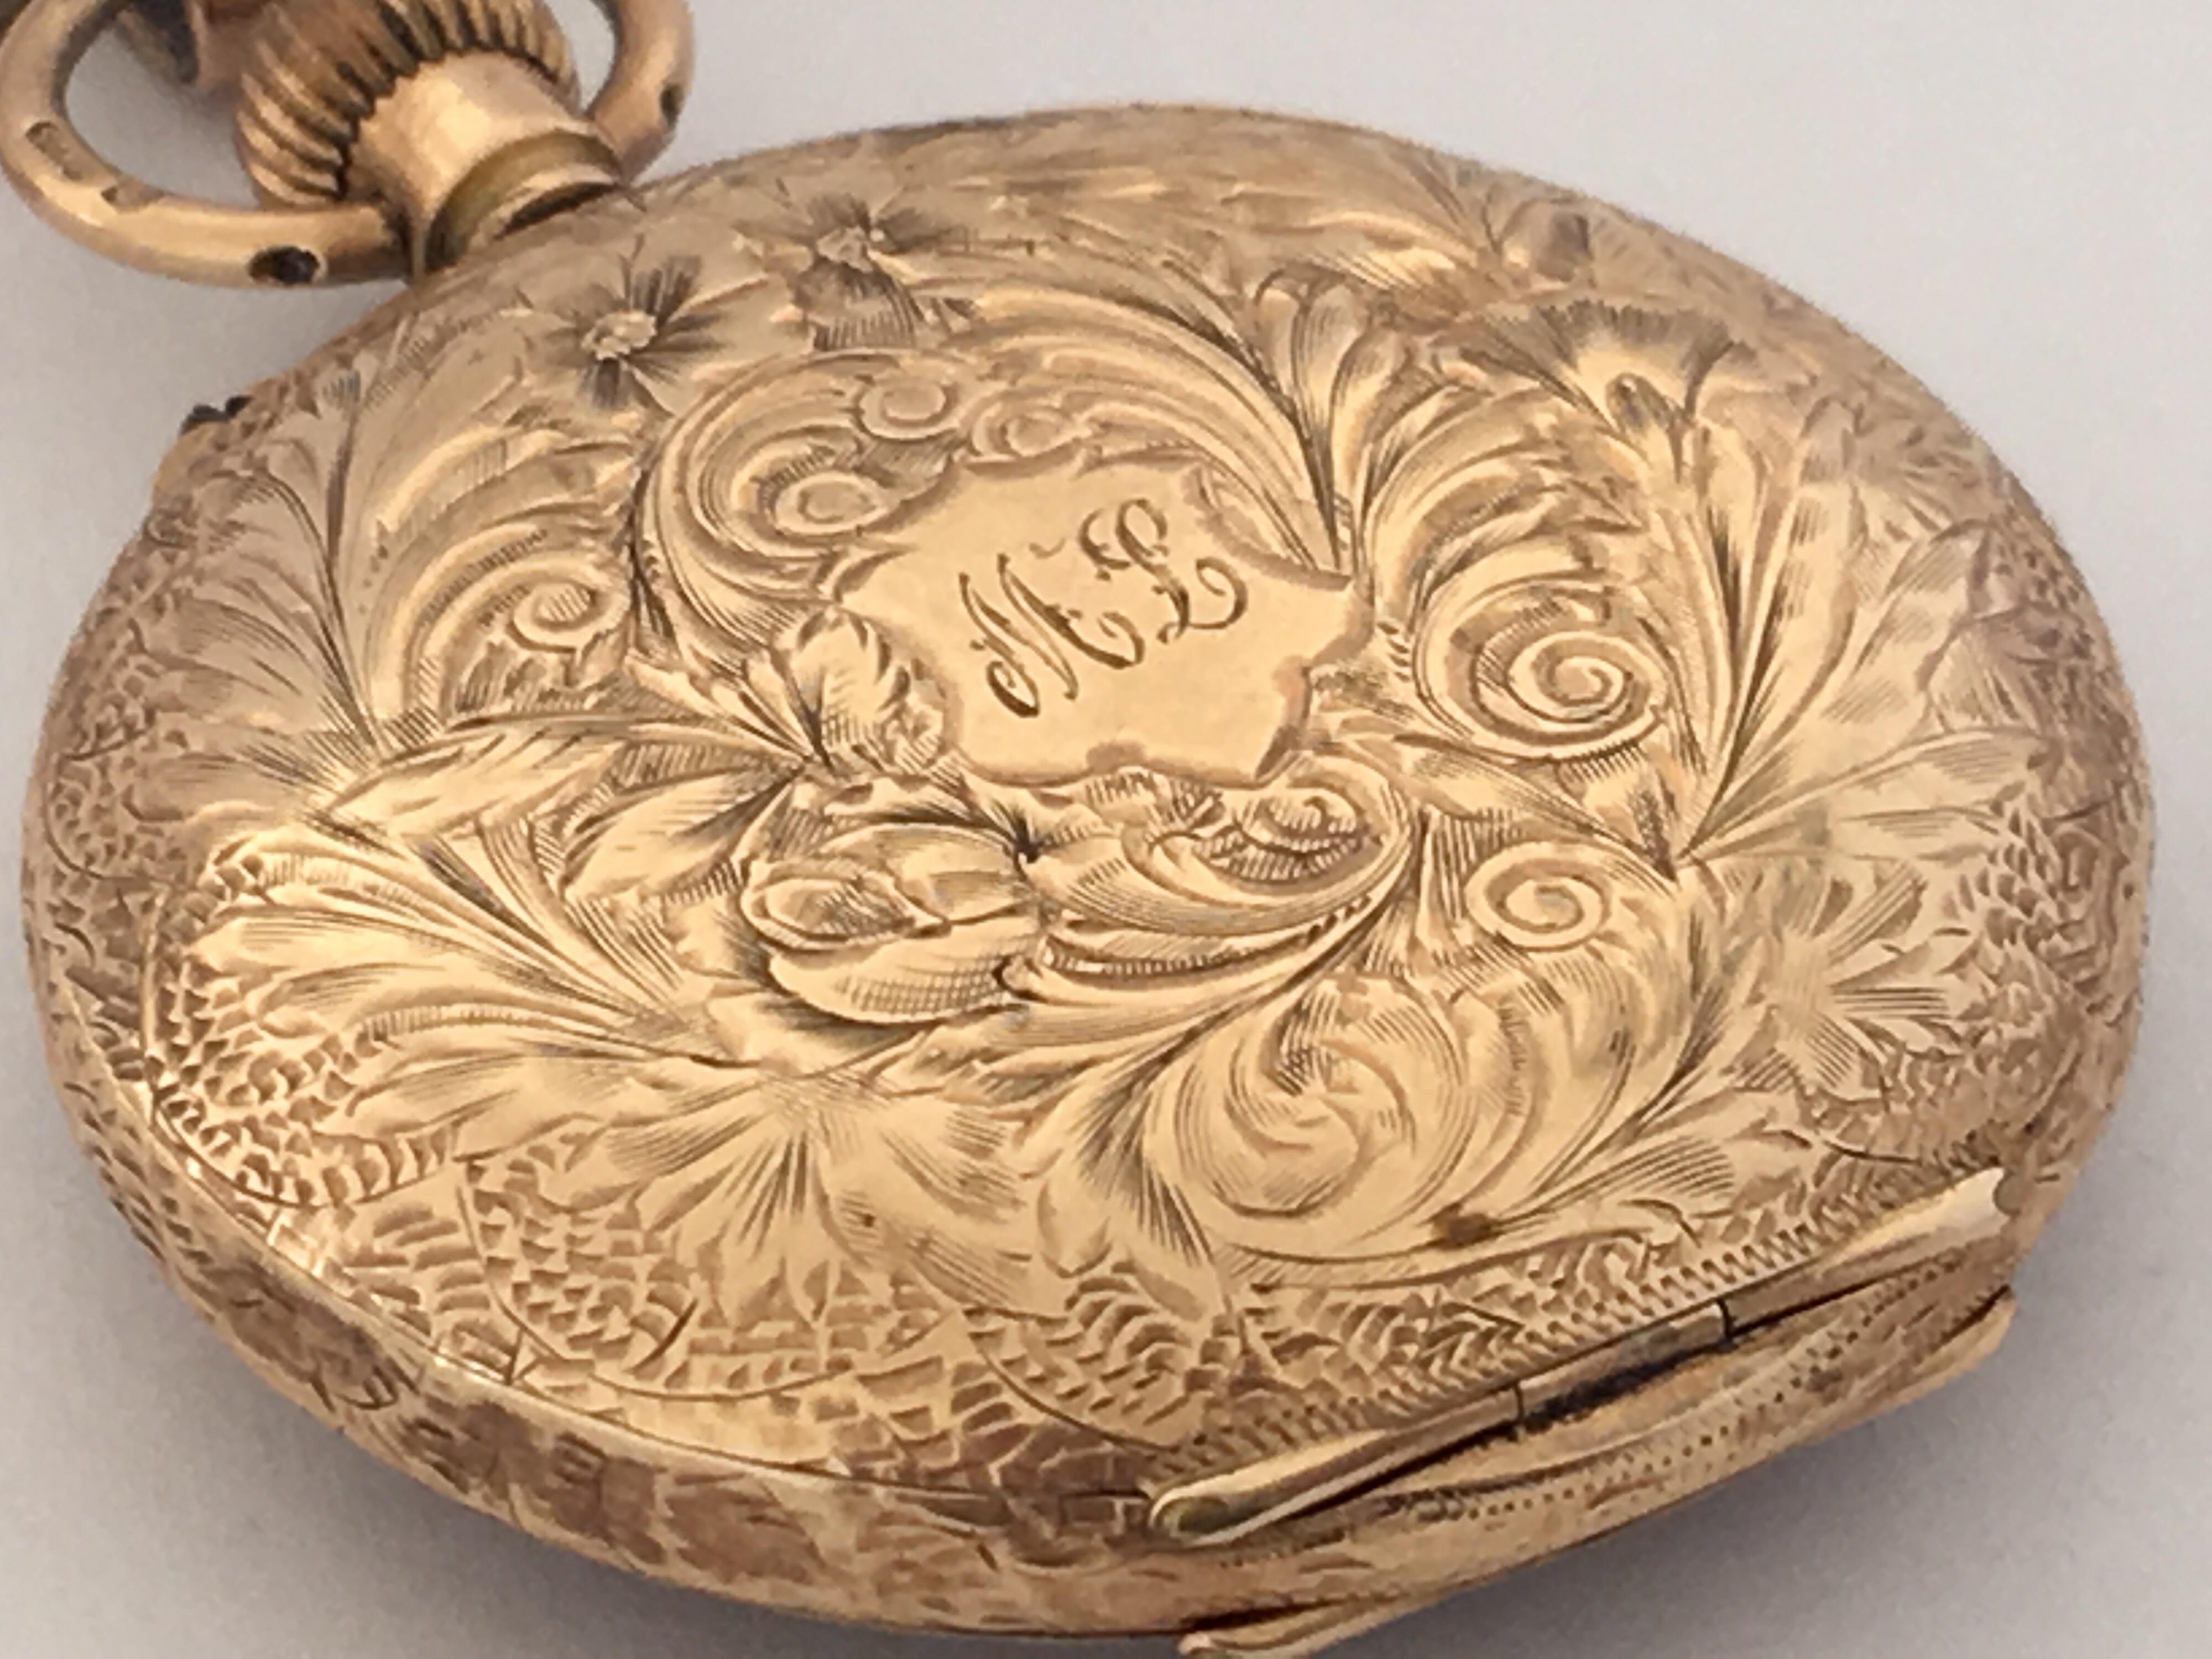 15 Karat Gold Enamel Gold Inlaid Dial Antique Brooch Fob Watch, circa 1890 For Sale 5